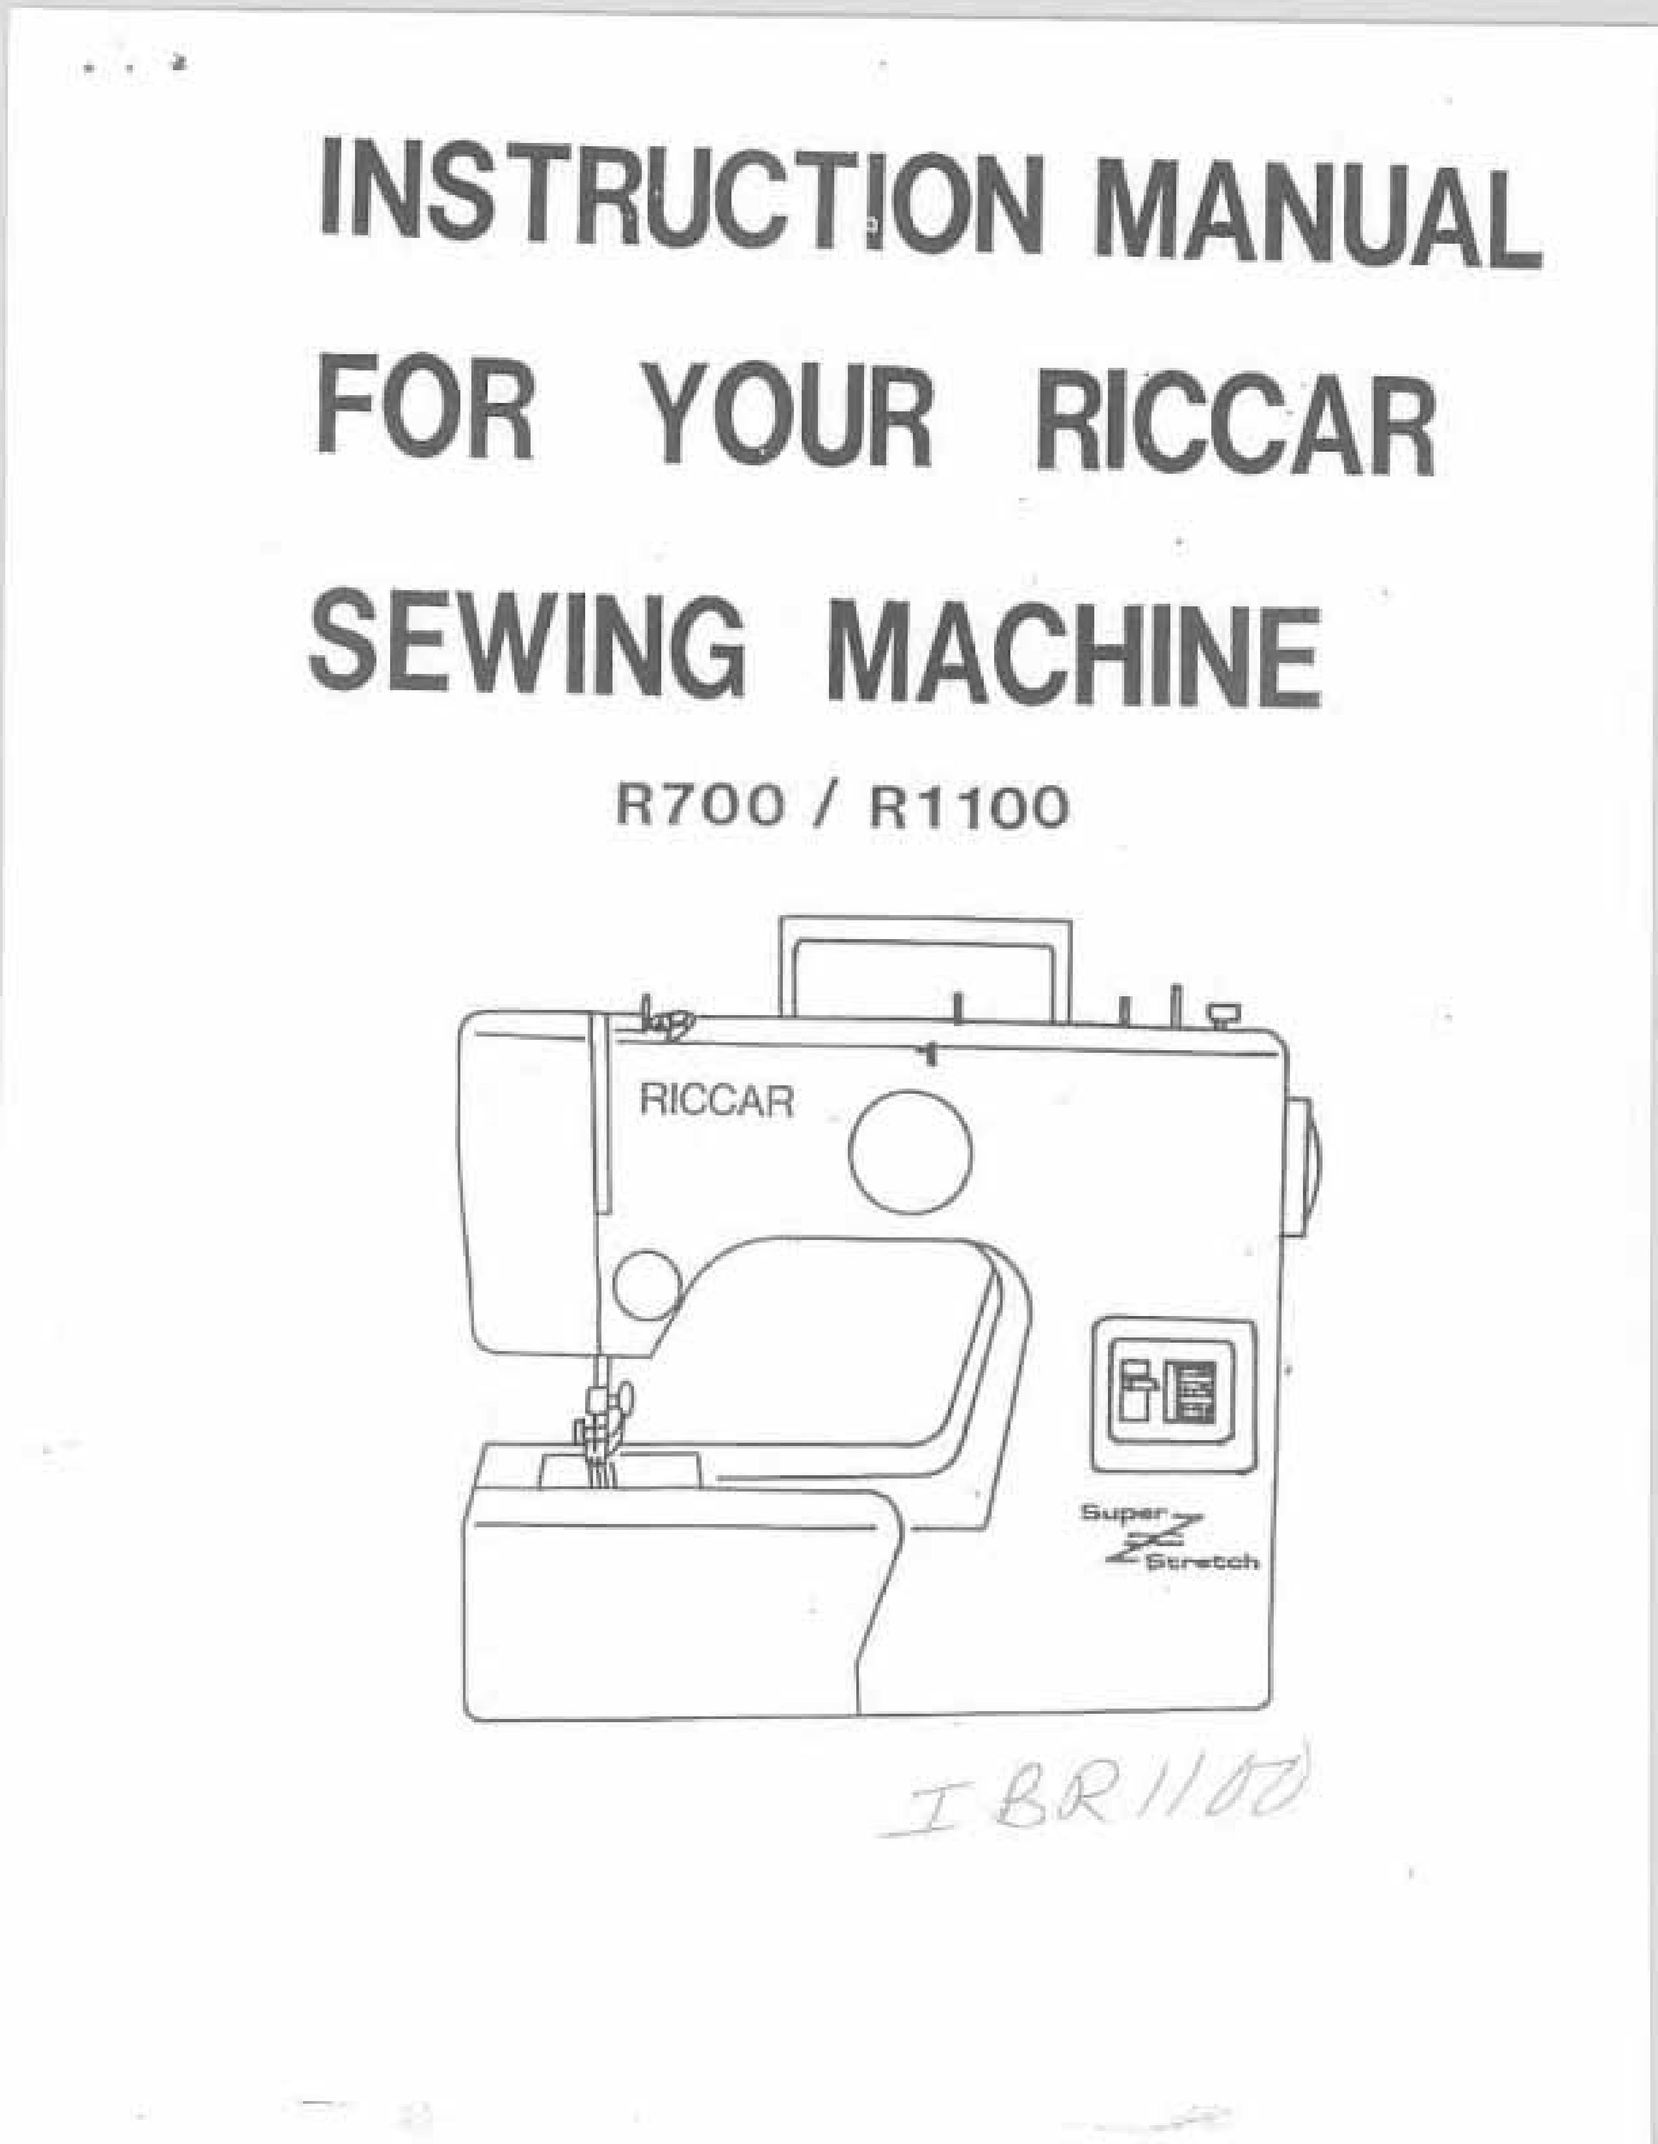 Riccar R1100 Sewing Machine User Manual